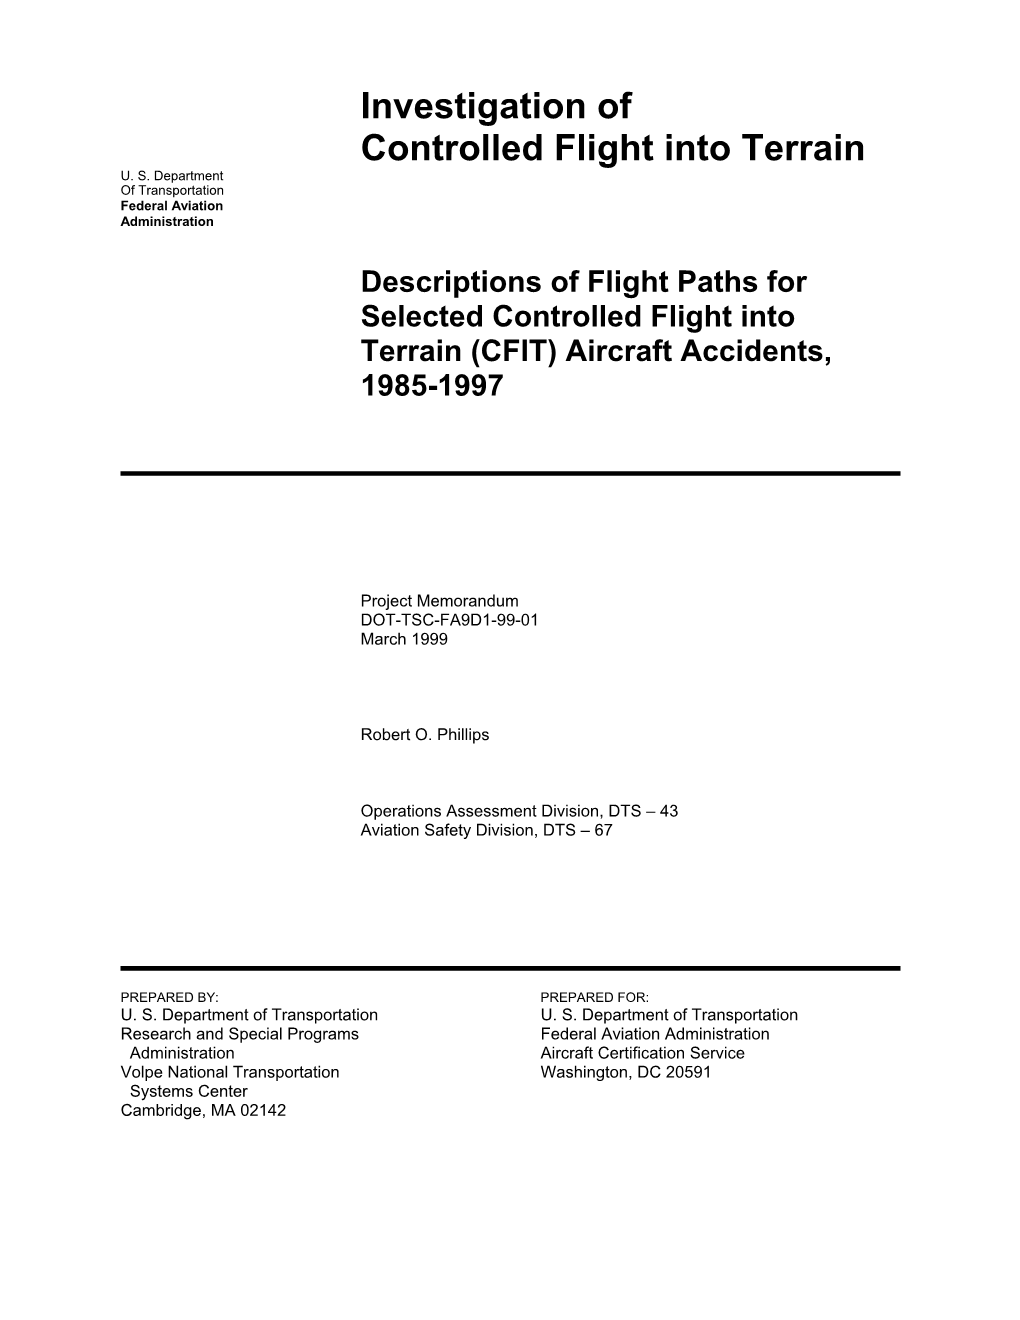 Investigation of Controlled Flight Into Terrain U